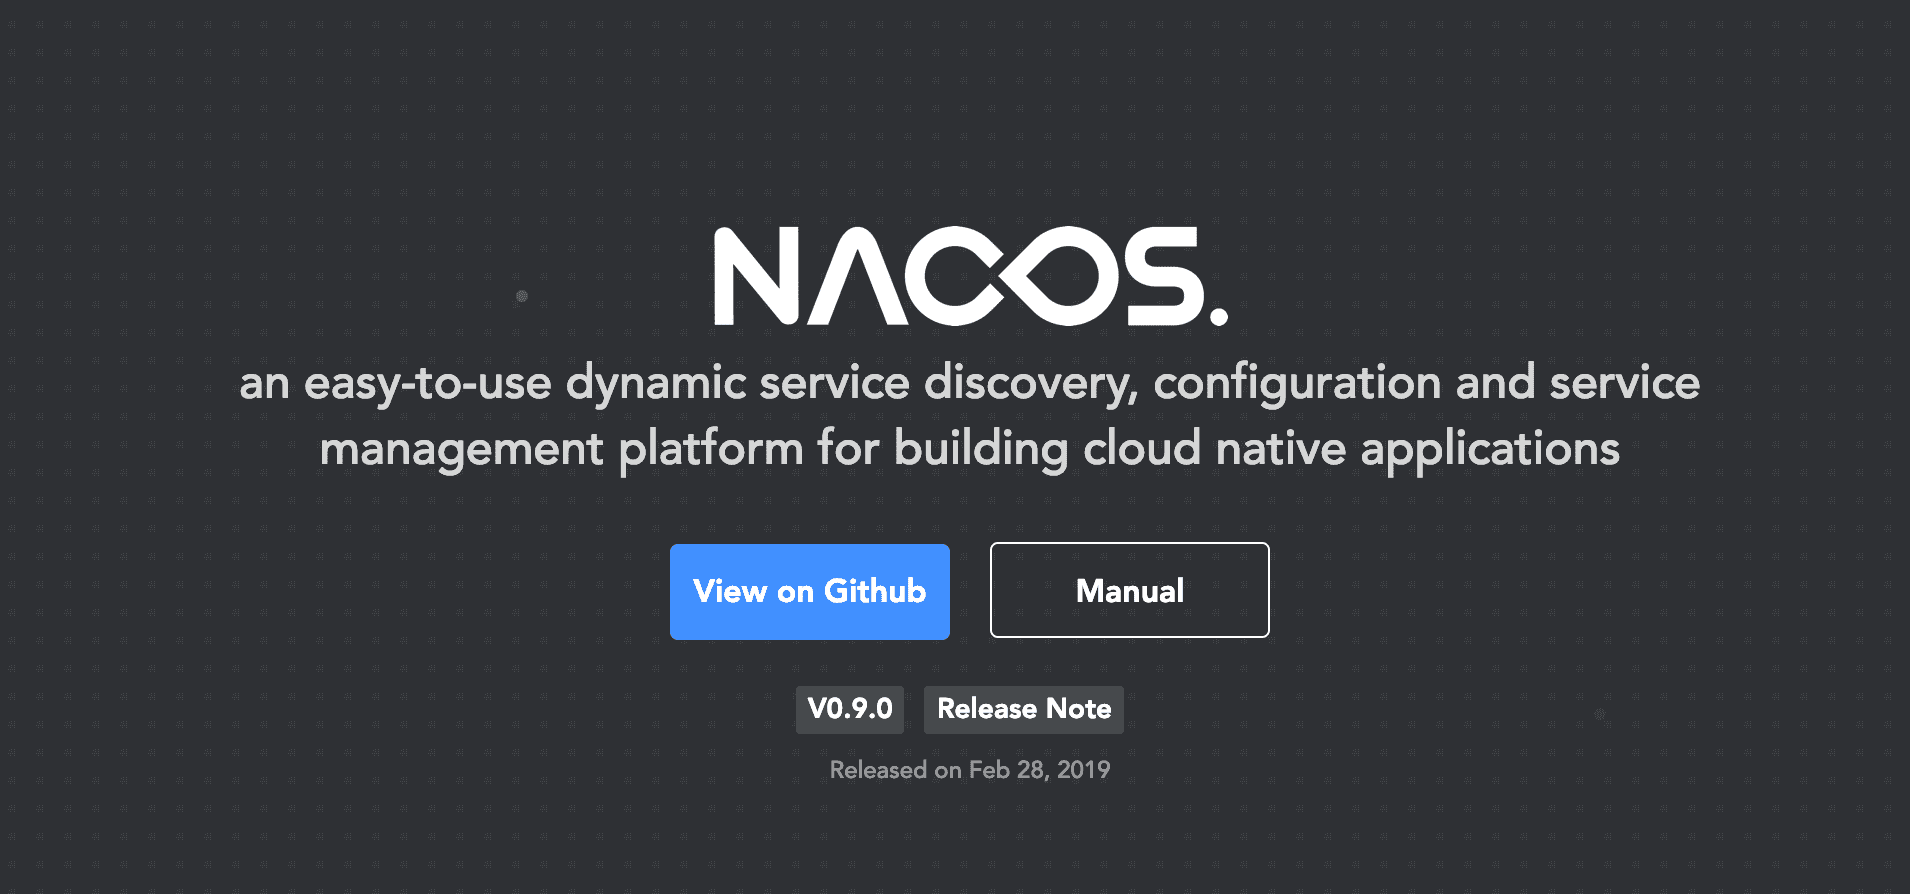 Nacos Committers 团队首亮相，发布 0.9.0 版本 